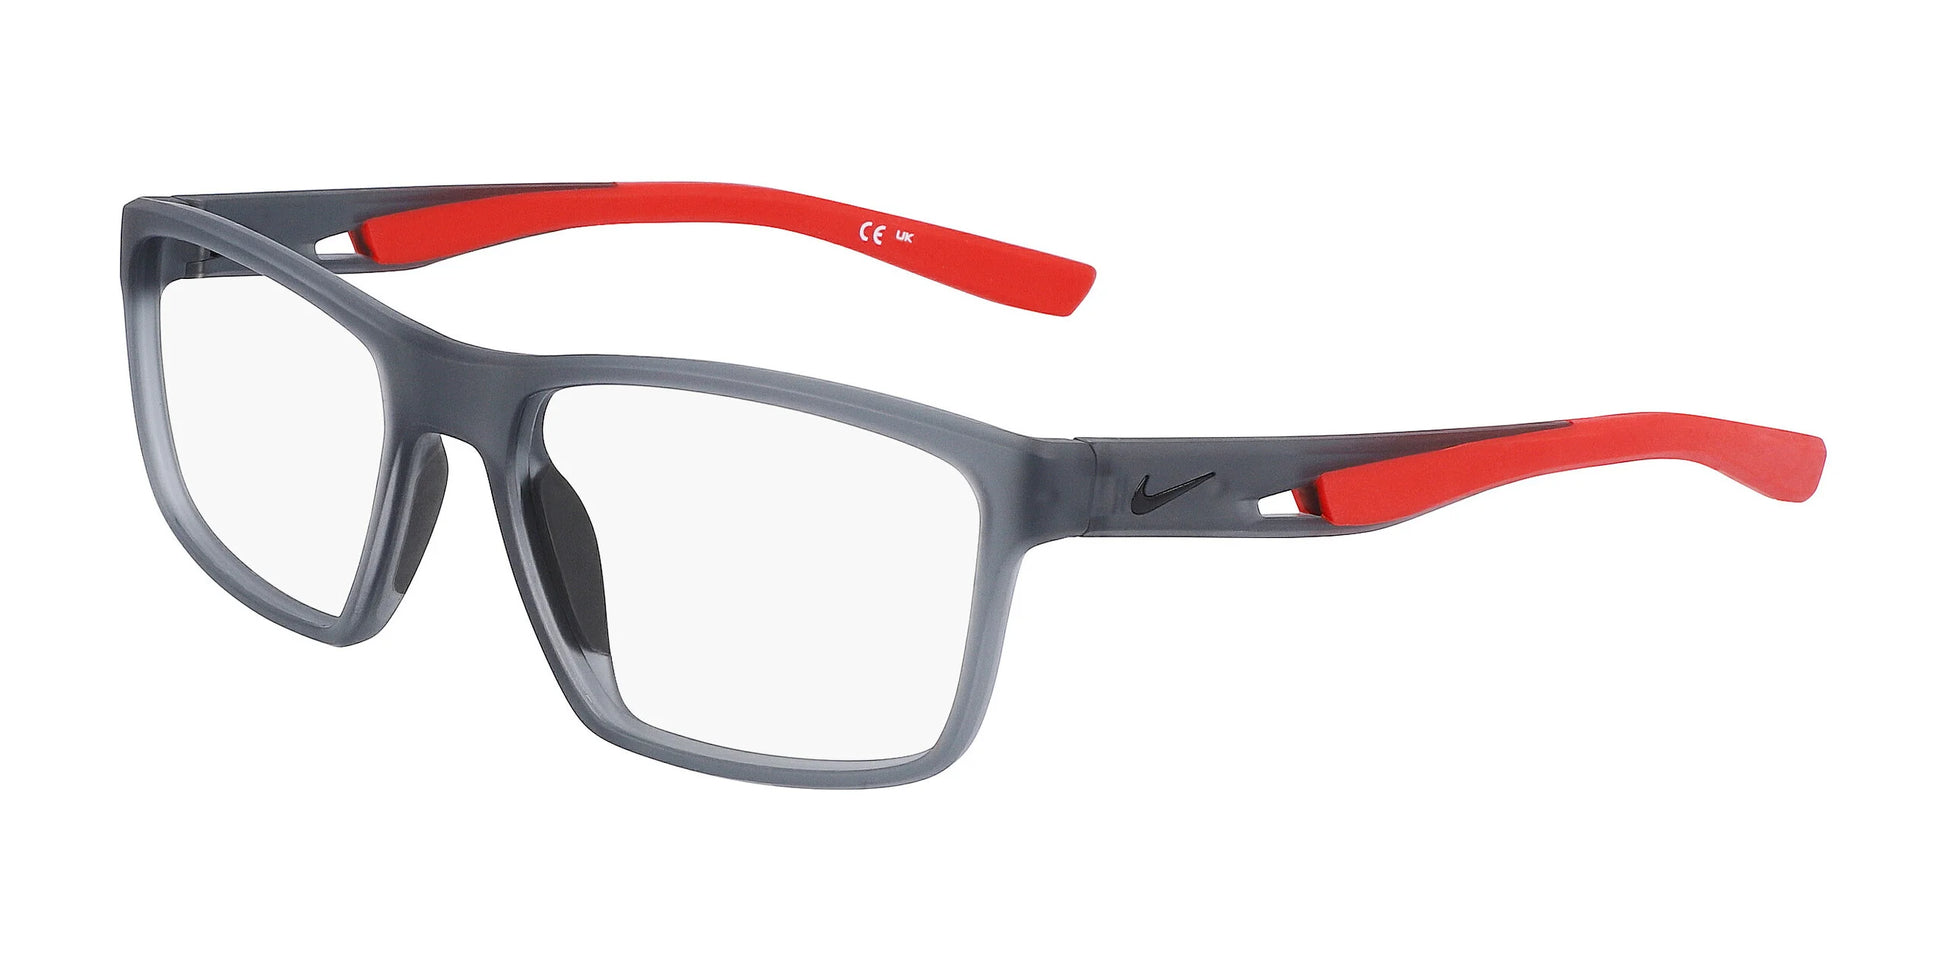 Nike 7015 Eyeglasses Matte Dark Grey / University Red